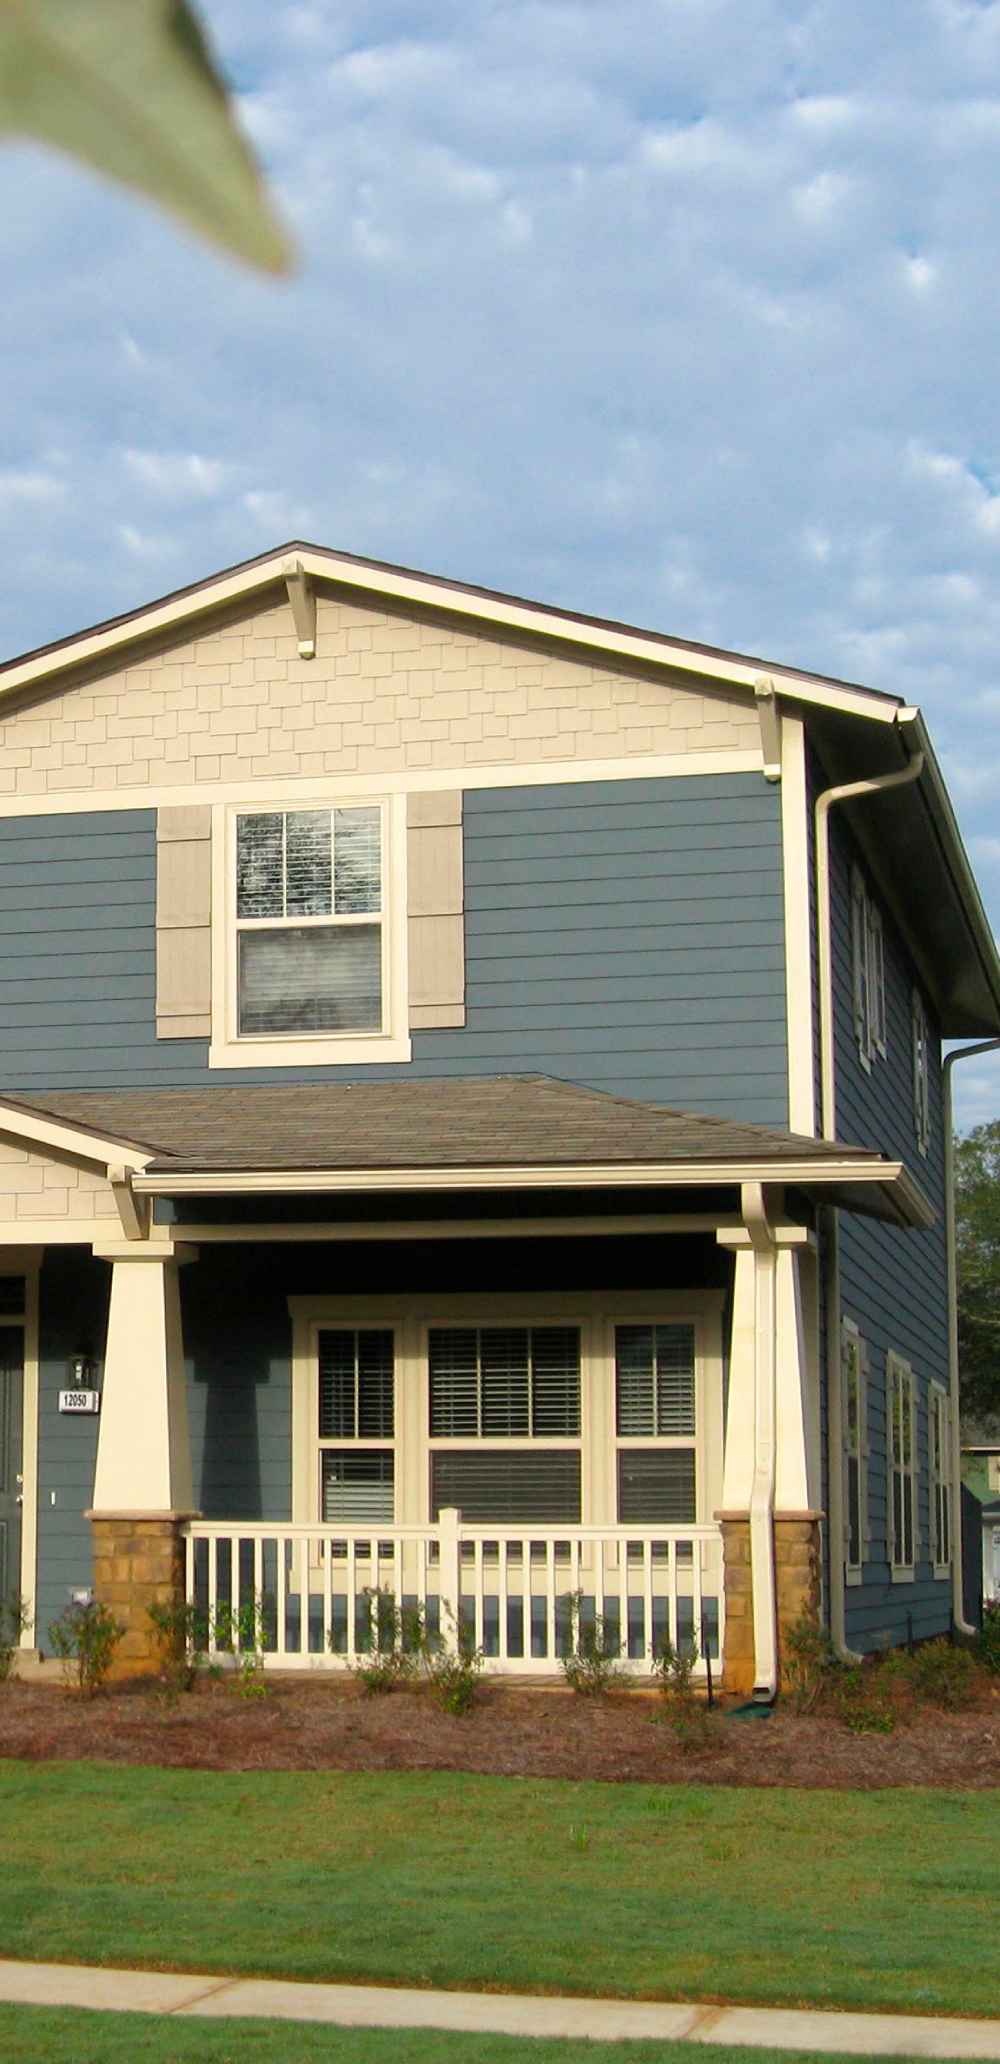 Home at CBG’s MCLB Albany located at 2010 Spencer Road, Albany, GA 31705.